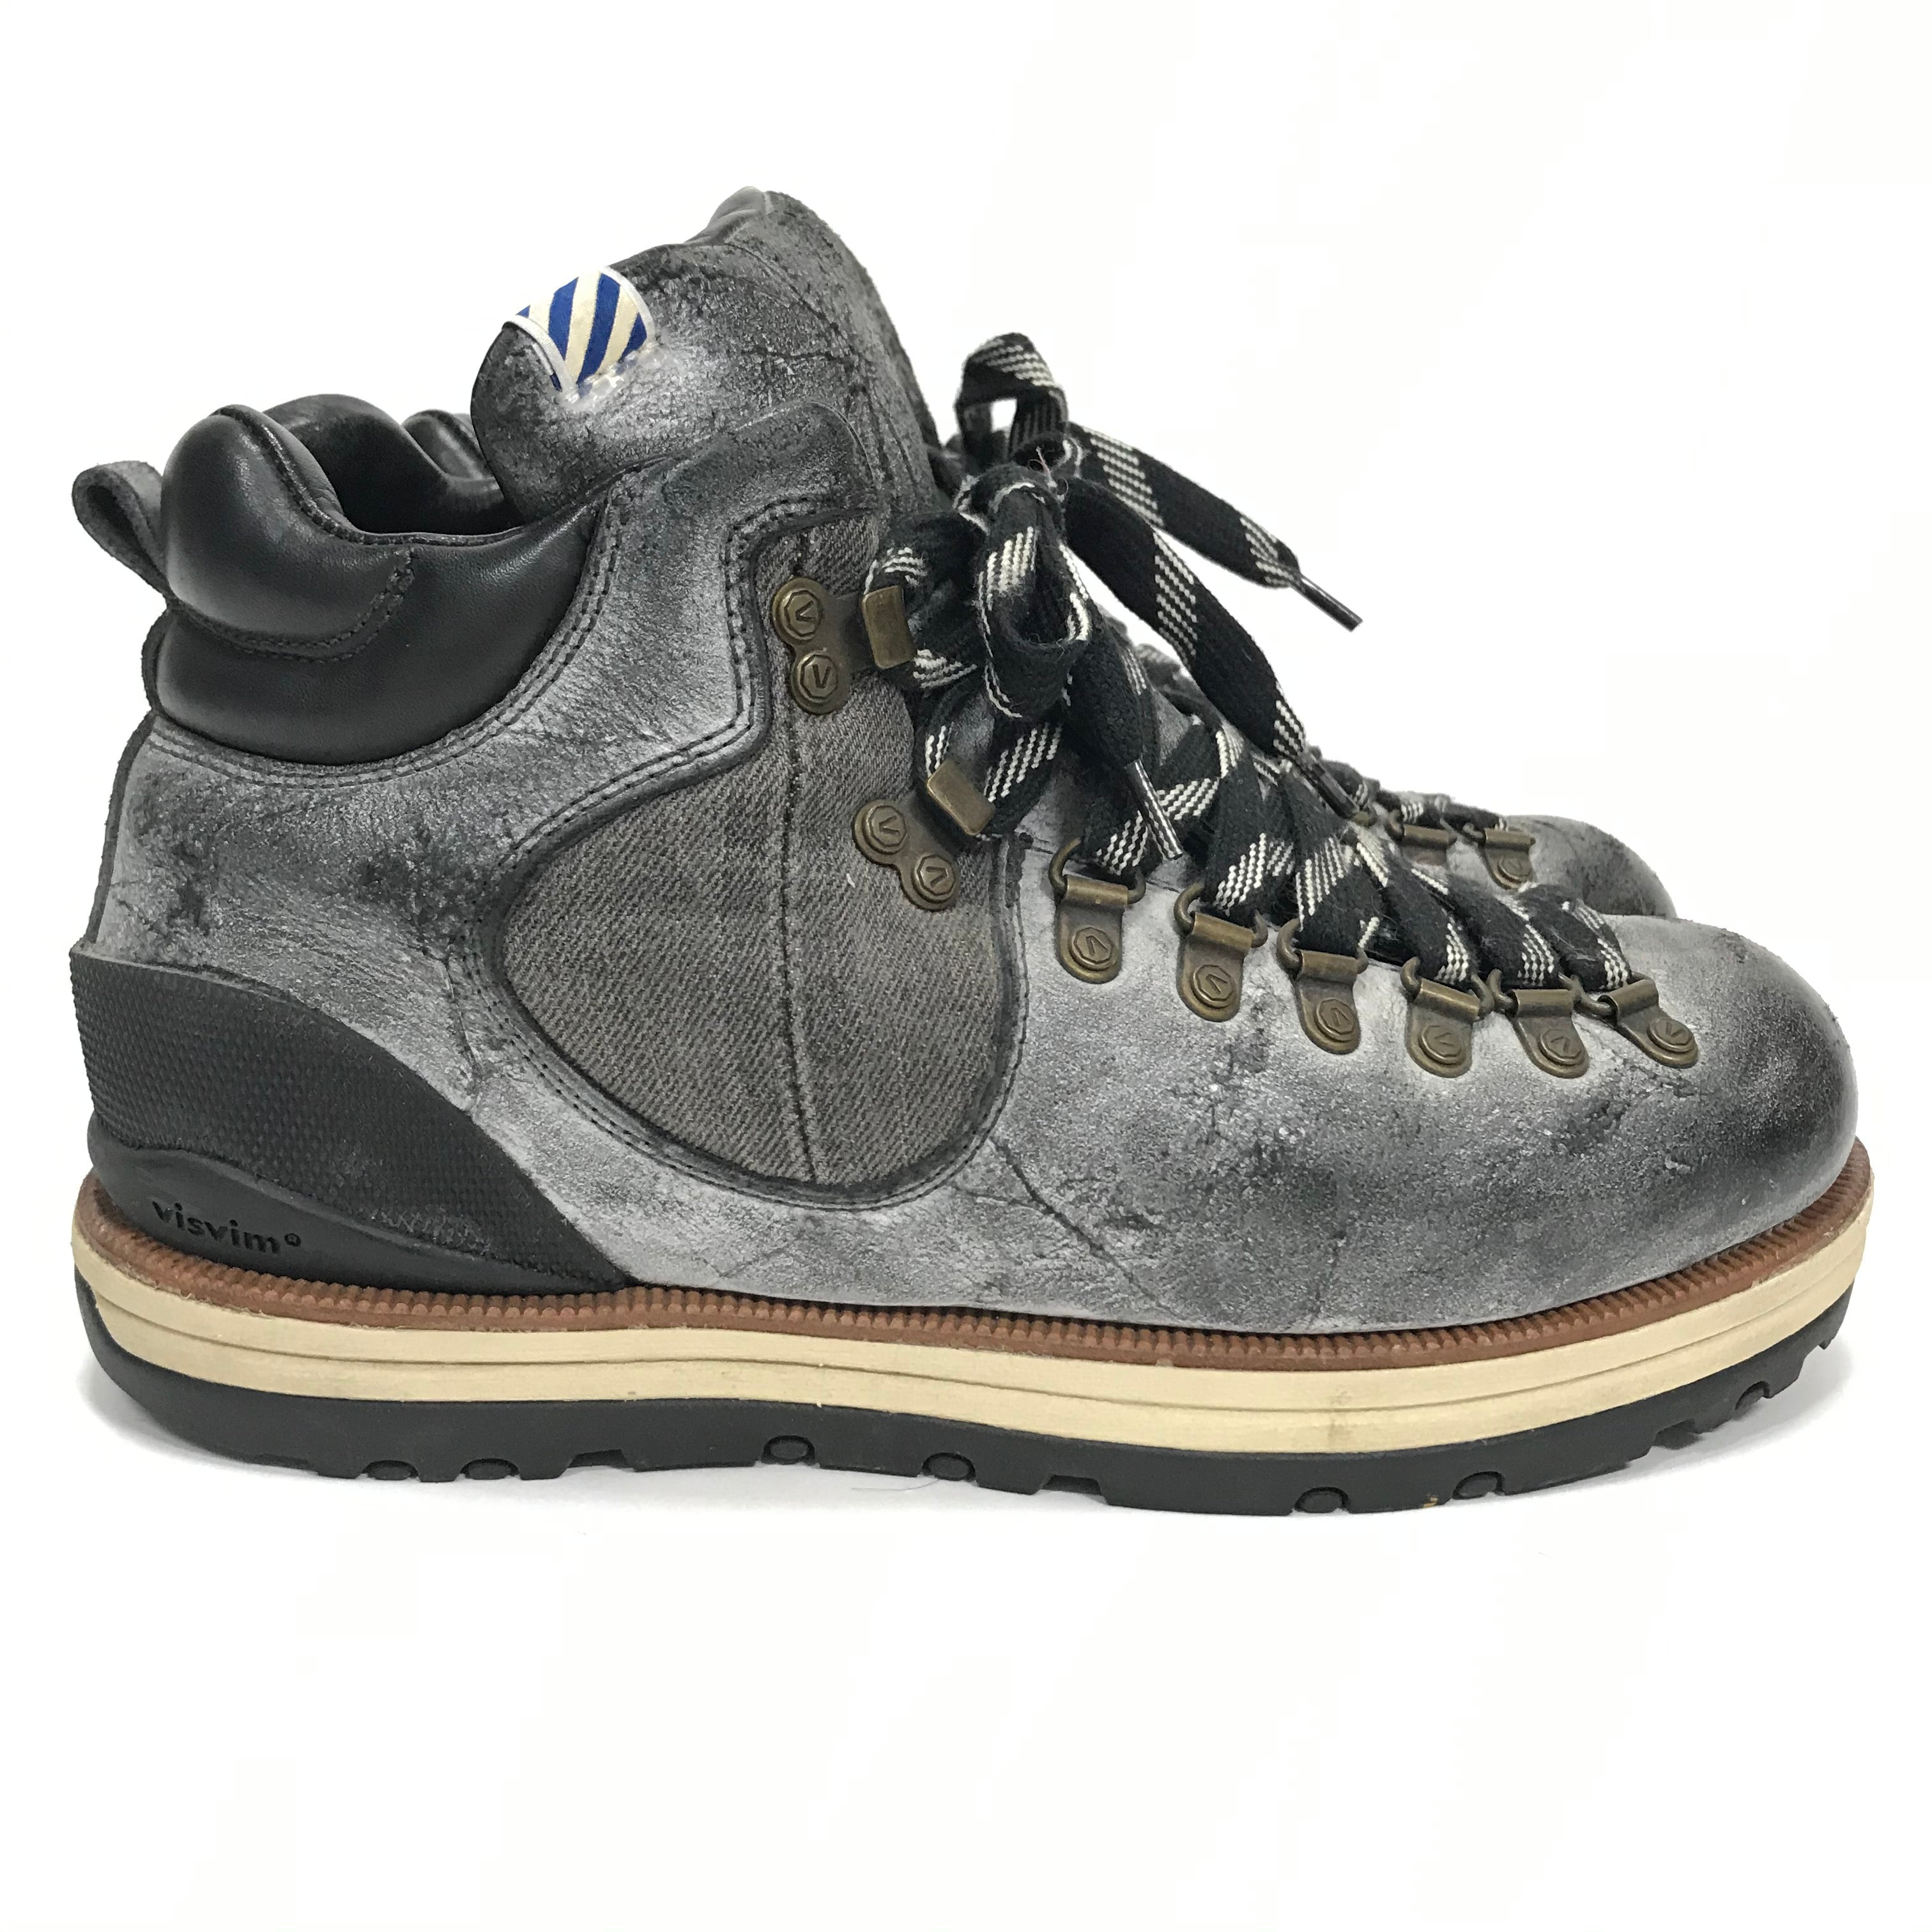 8.5] Visvim 11AW Serra Boots Leather/Denim – StylisticsJapan.com